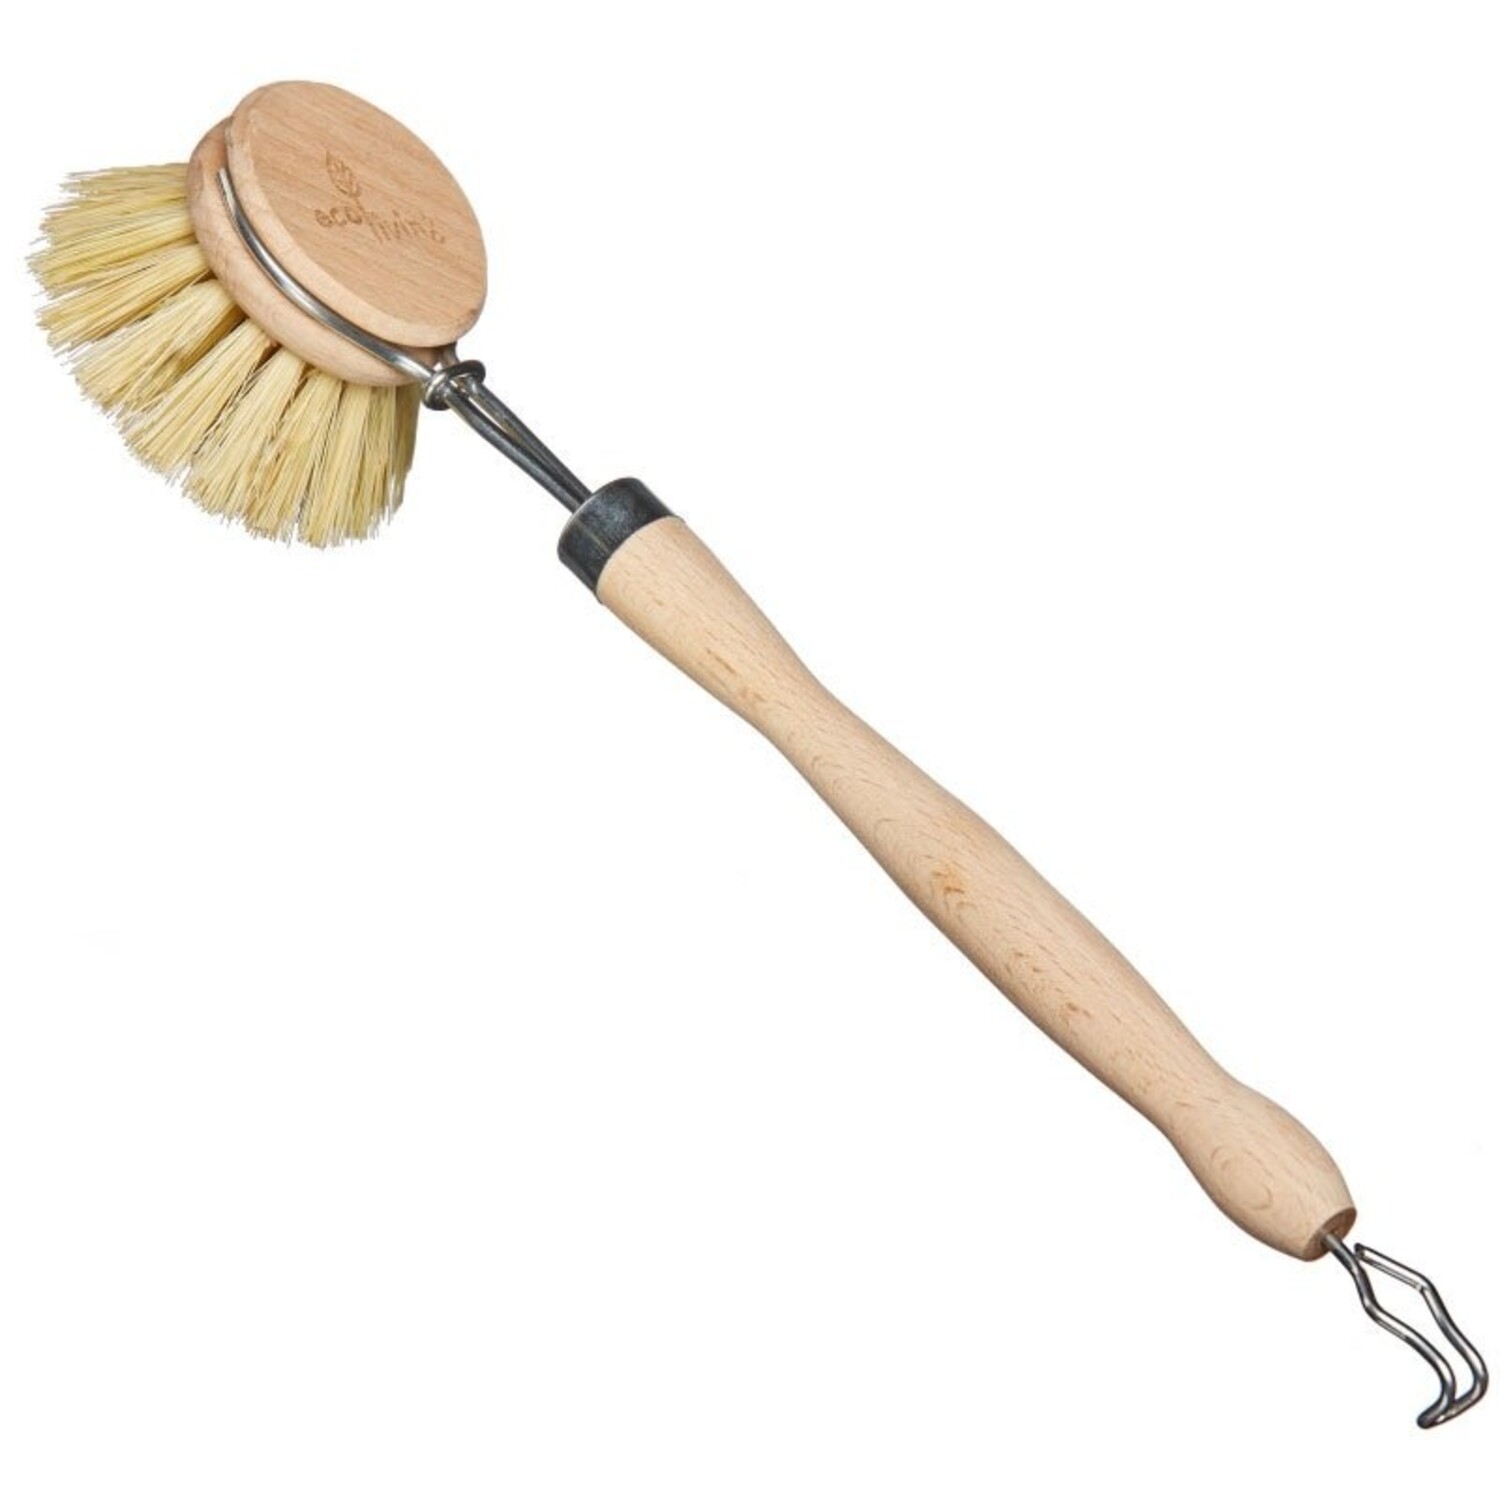  Larga Vitae Wooden Dish Brush Handles Made of